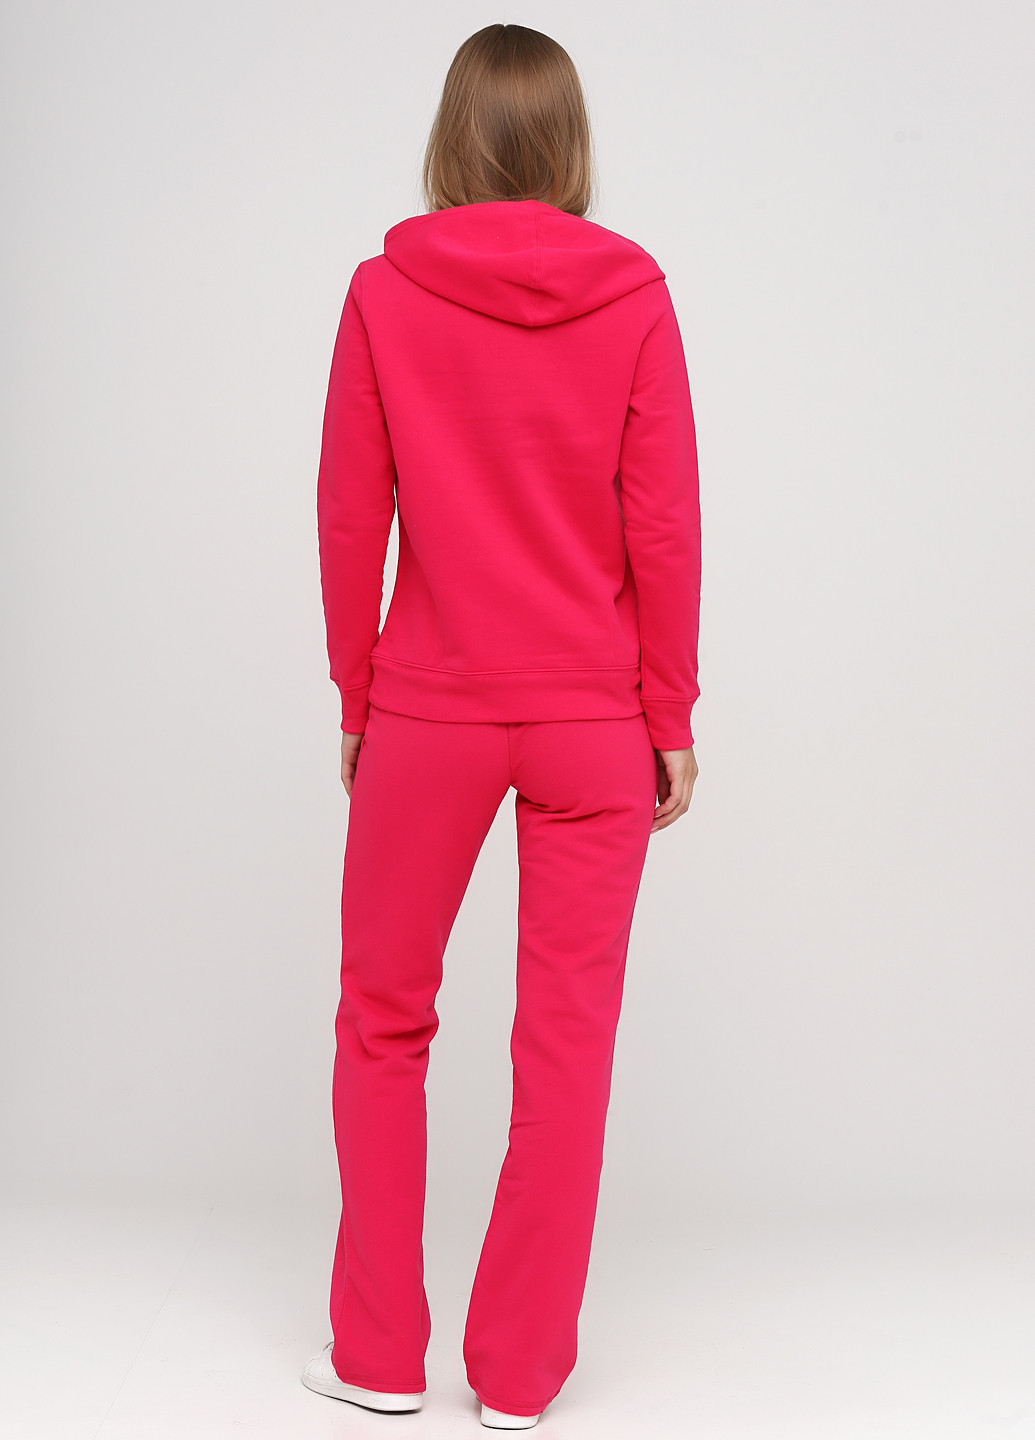 Костюм (худи, брюки) Gap логотип розовый спортивный хлопок, футер